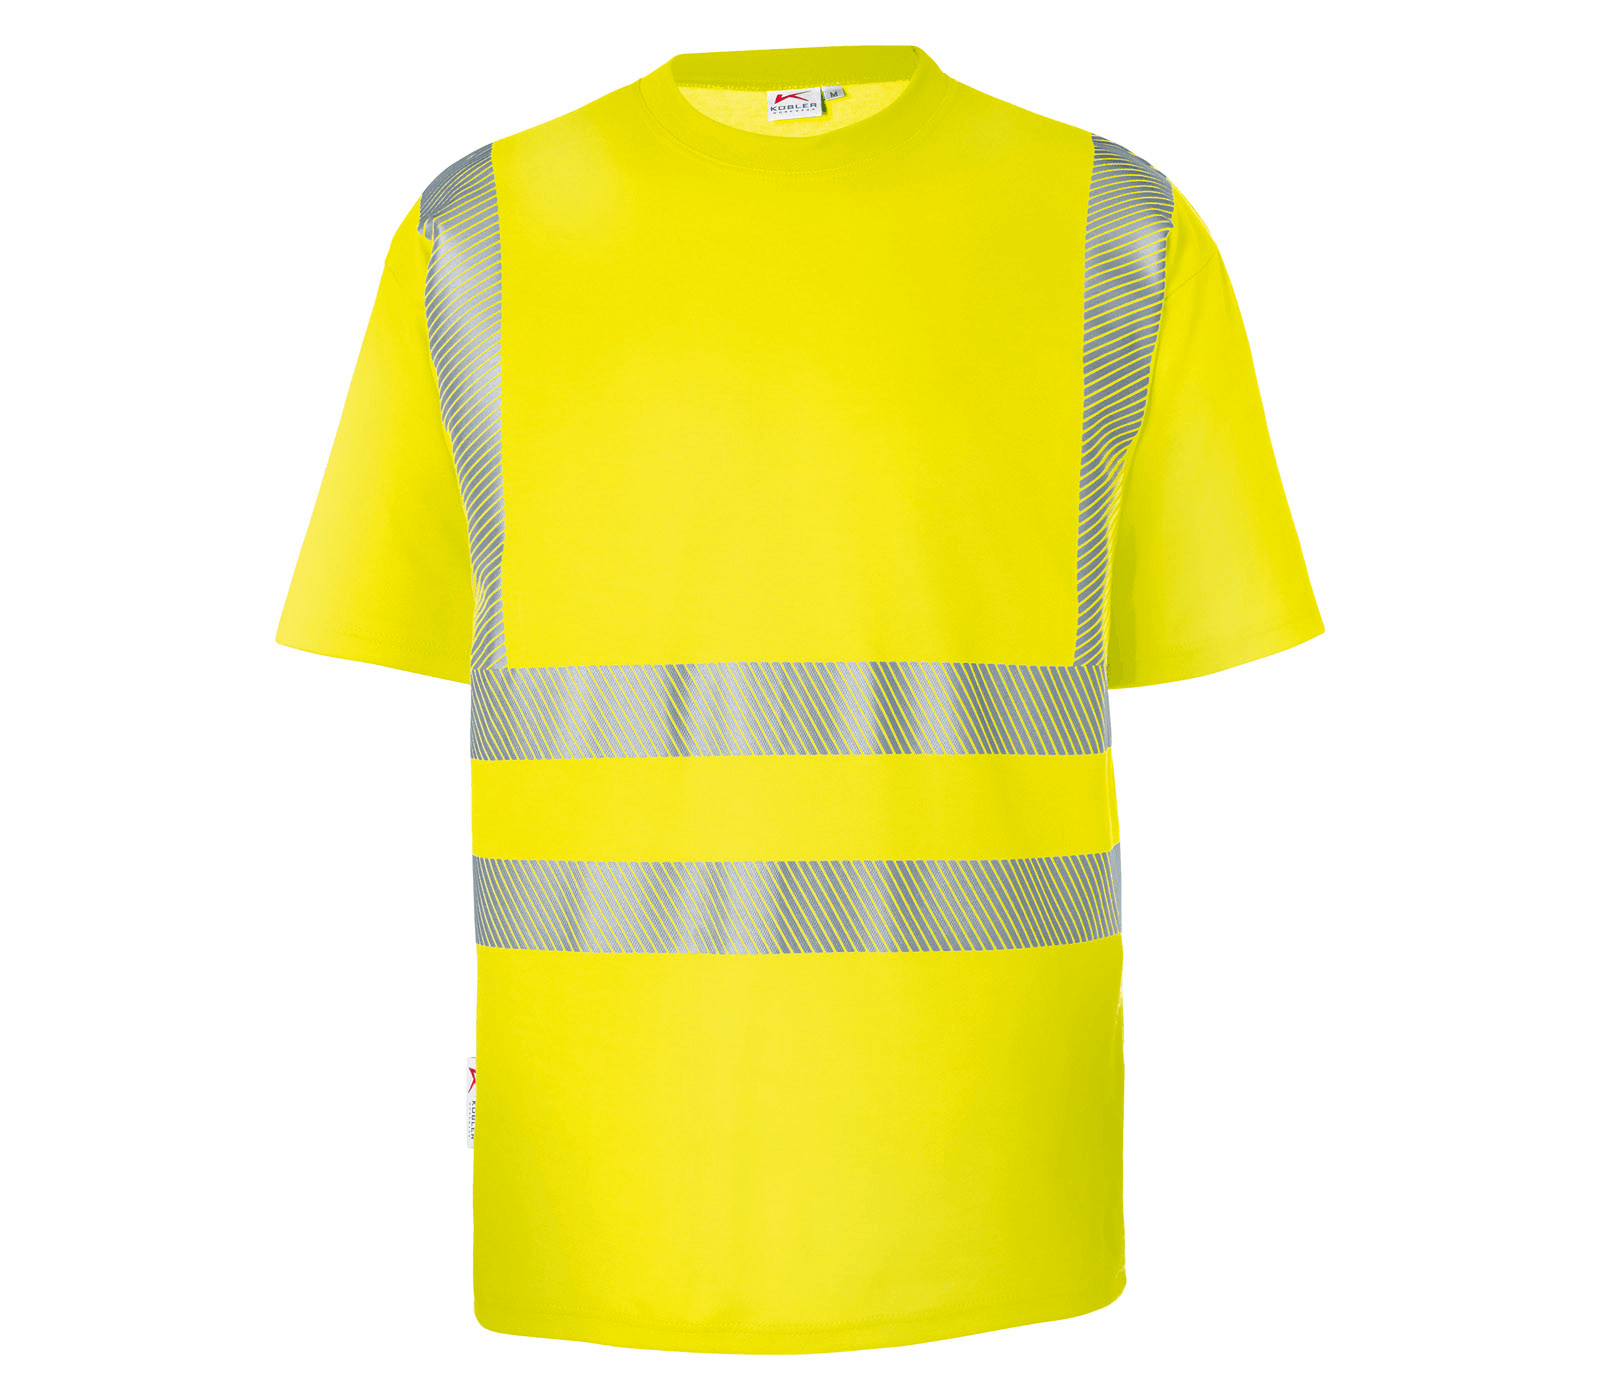 Kübler T-Shirt REFLECTIQ 5043 - Arbeitsschutz Shop GmbH Konstant Arbeitsschutz 